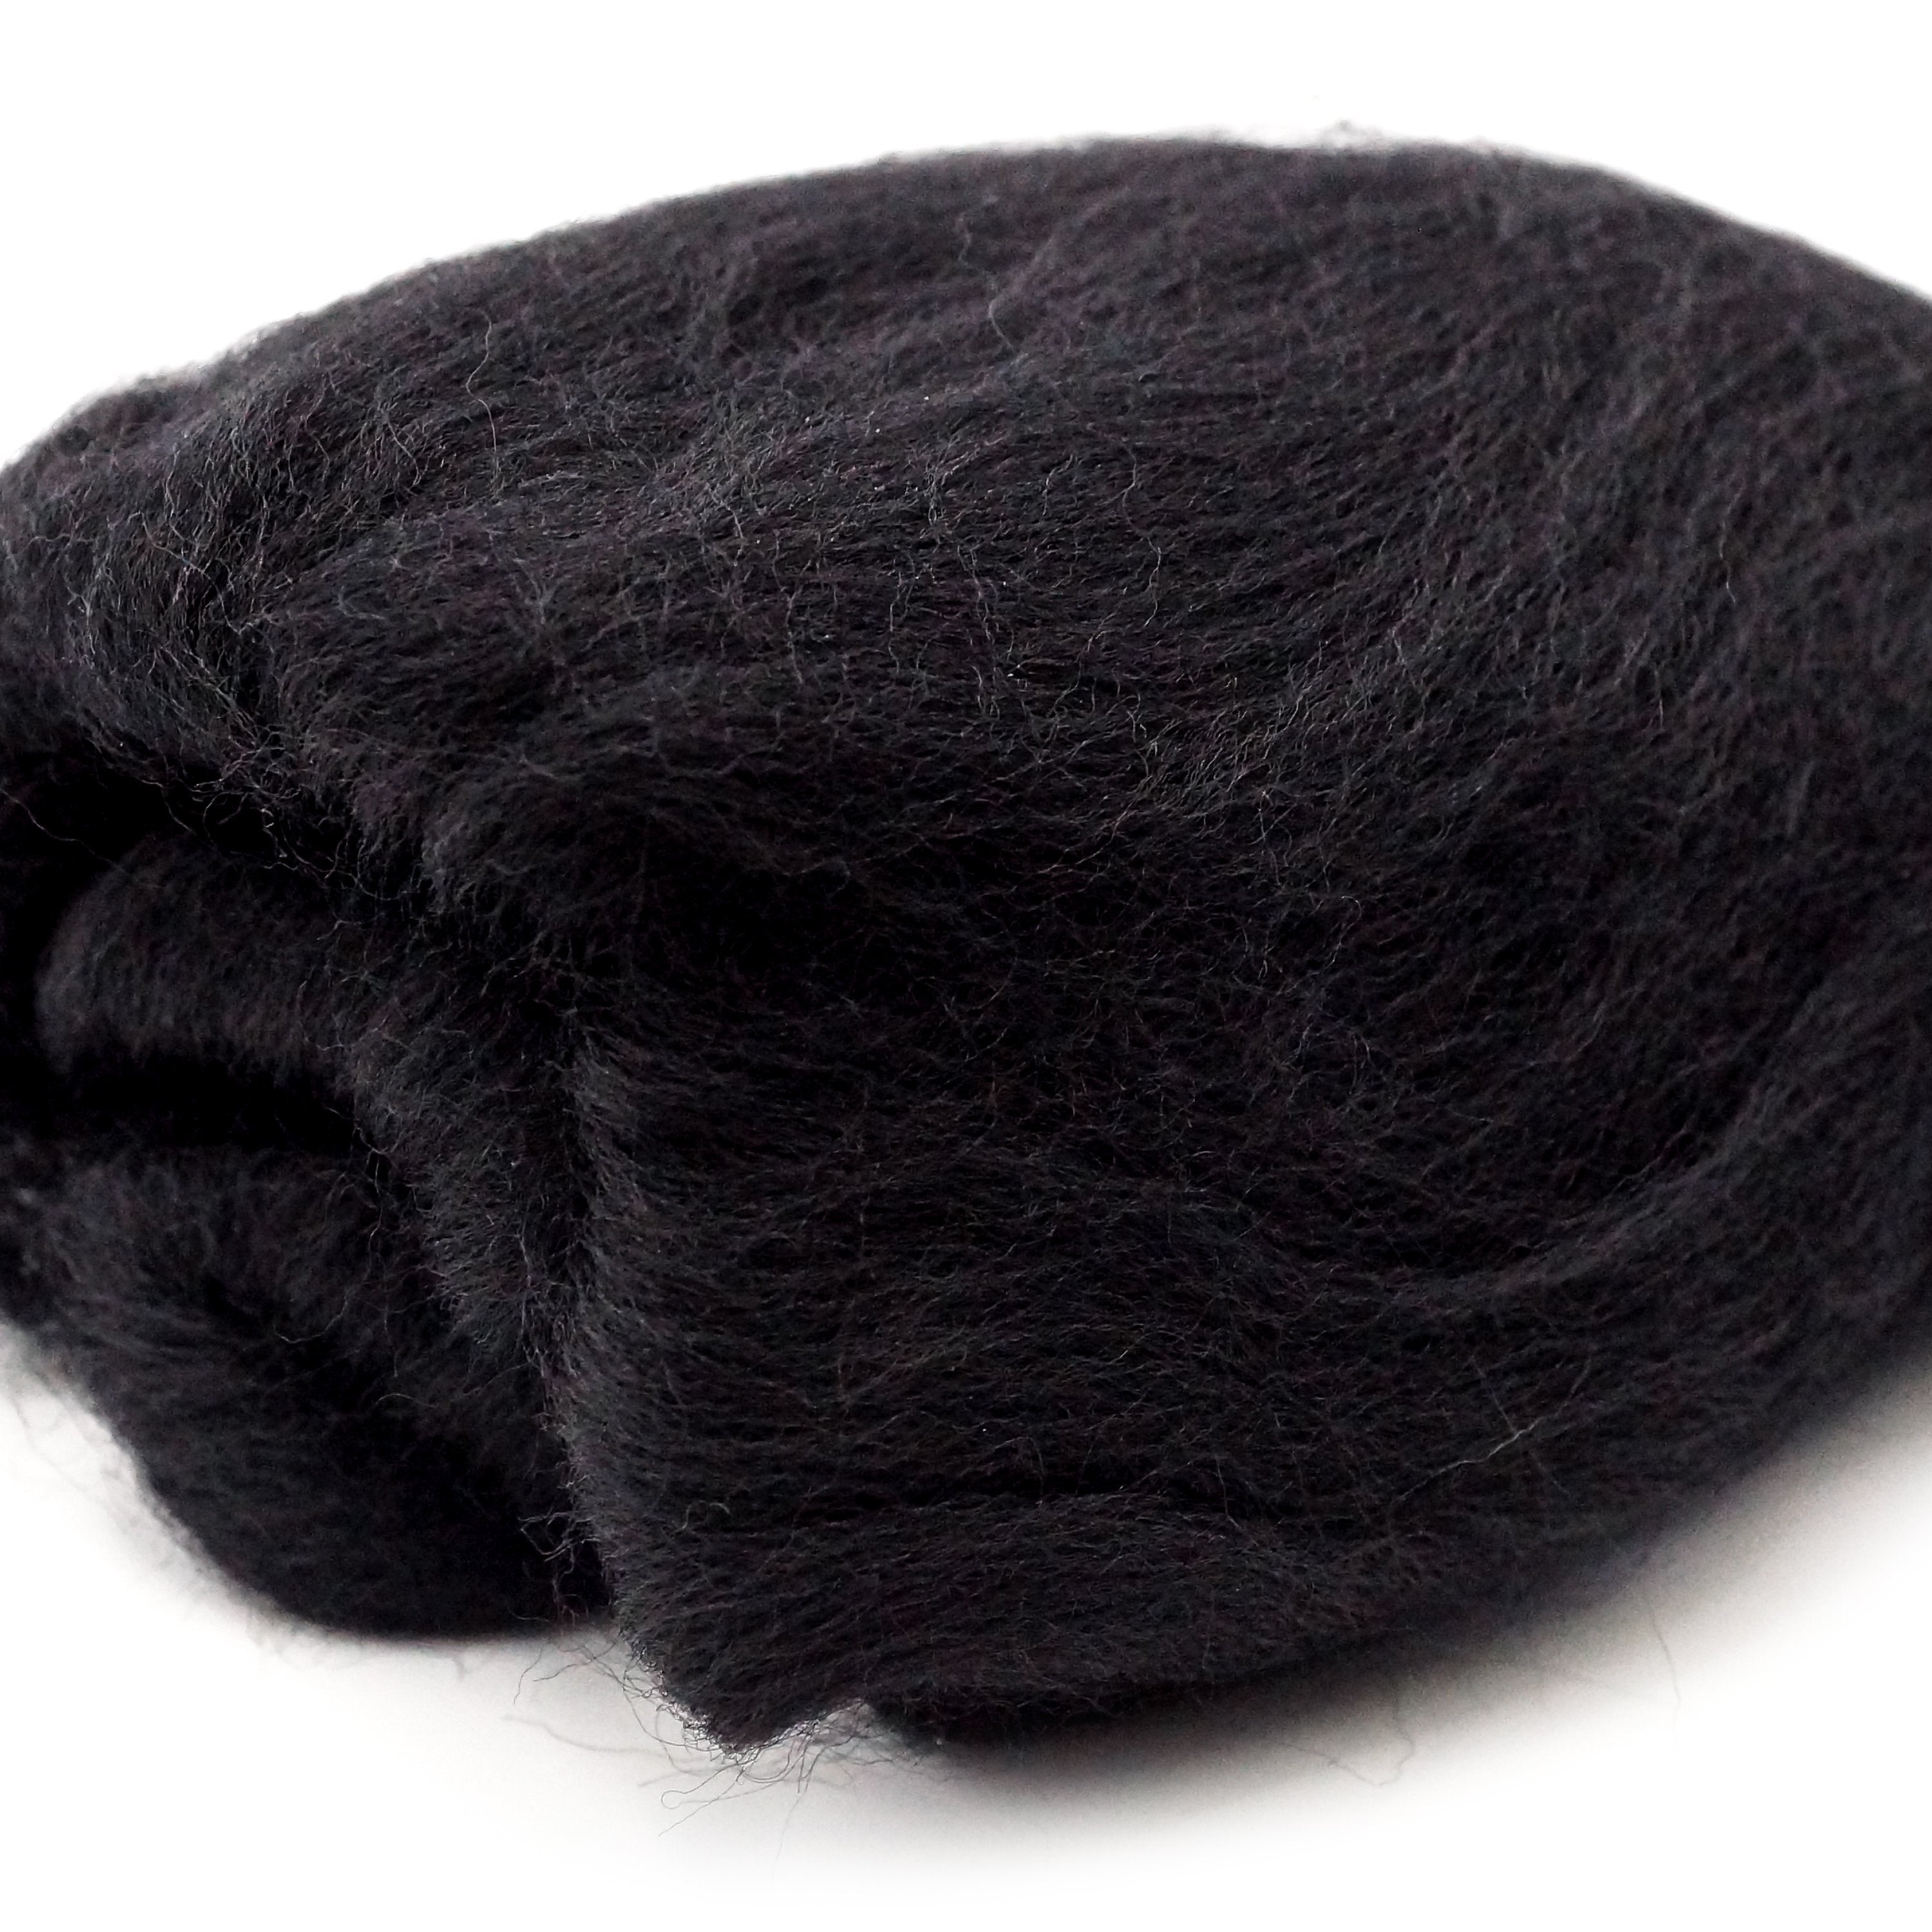 CLV - Natural Wool Roving (Black)